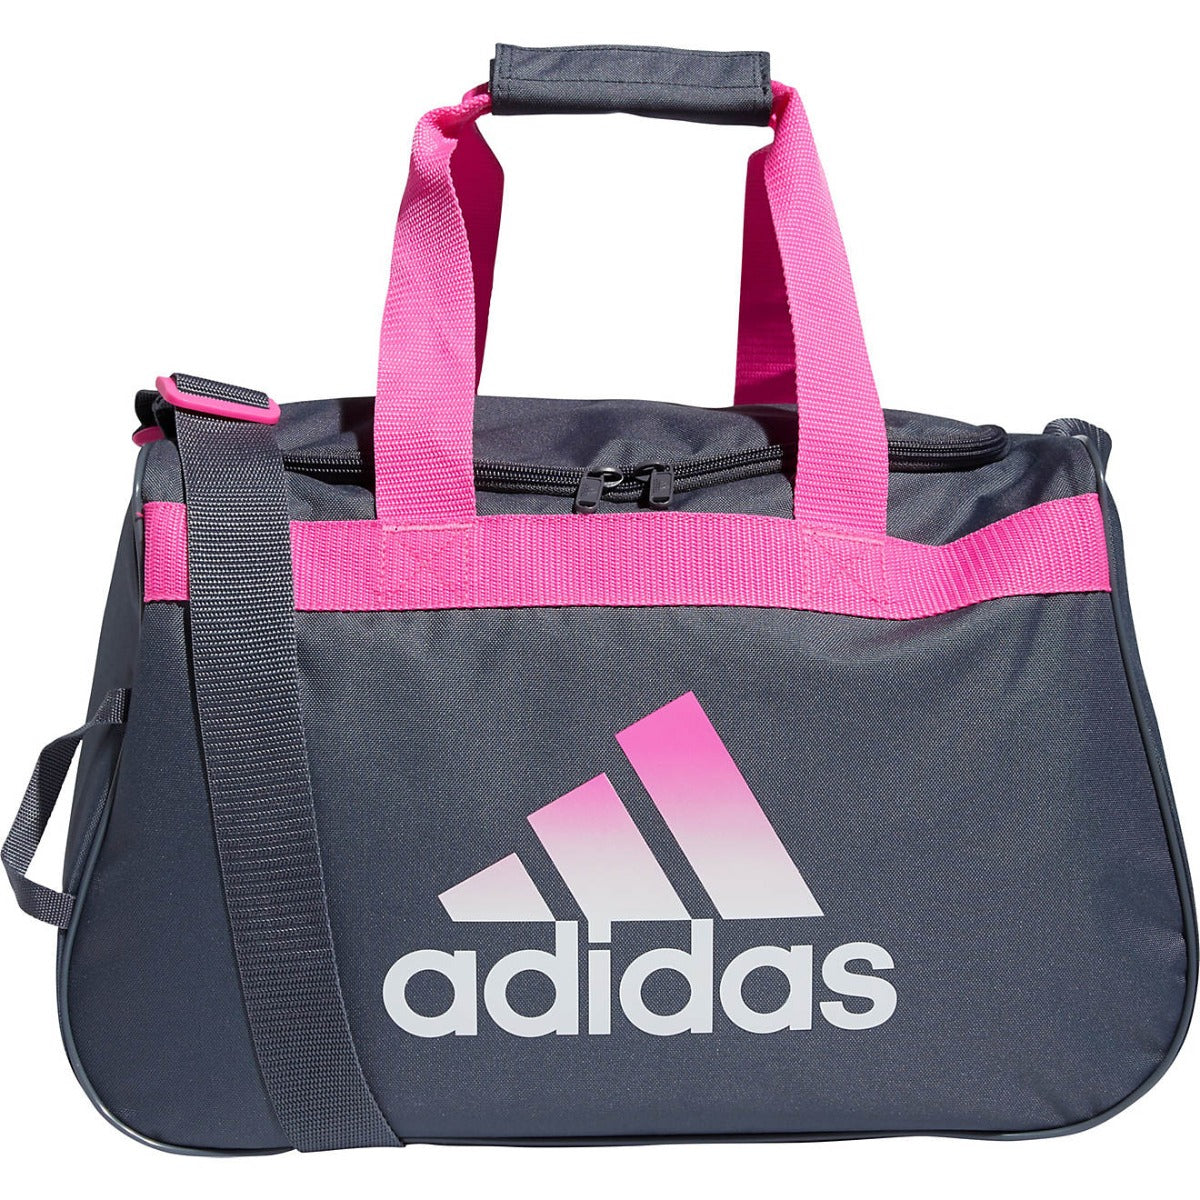 Adidas Diablo Small Duffel Bag Onix-Pink (Front)